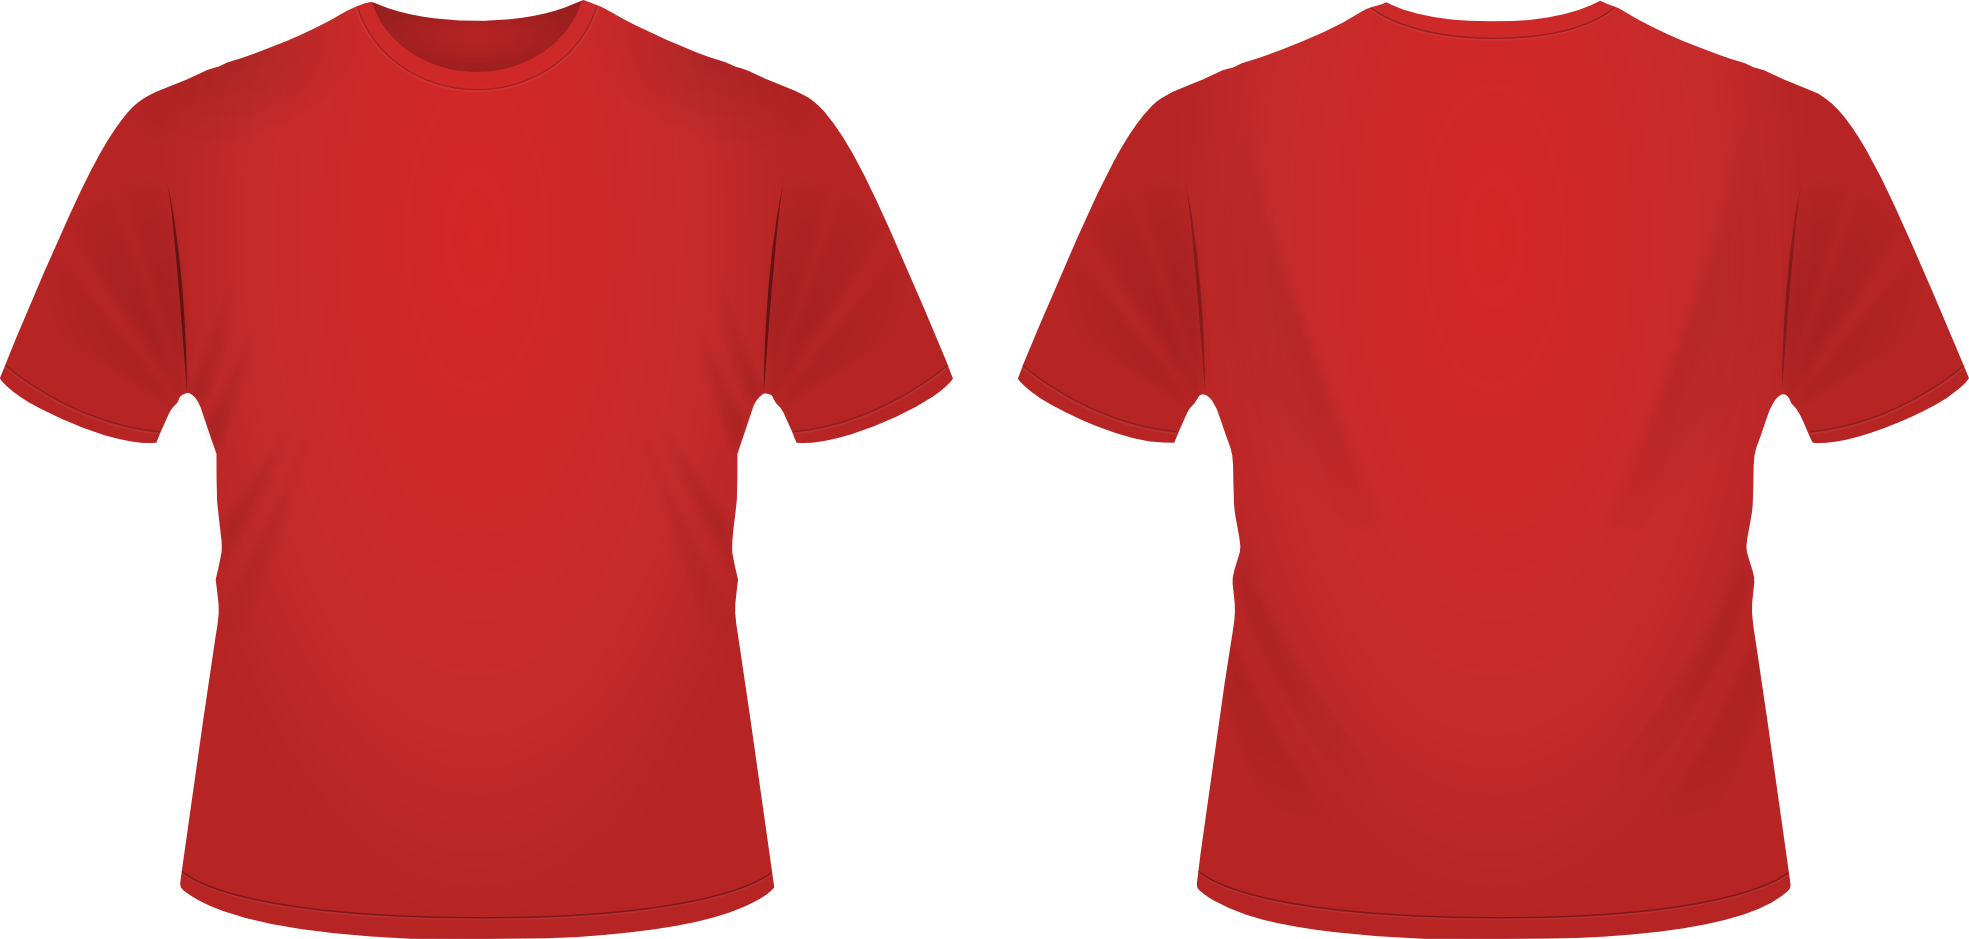 jersey mockup cdr shirts Shopswell T Red | Shirt mockup, Shirt template